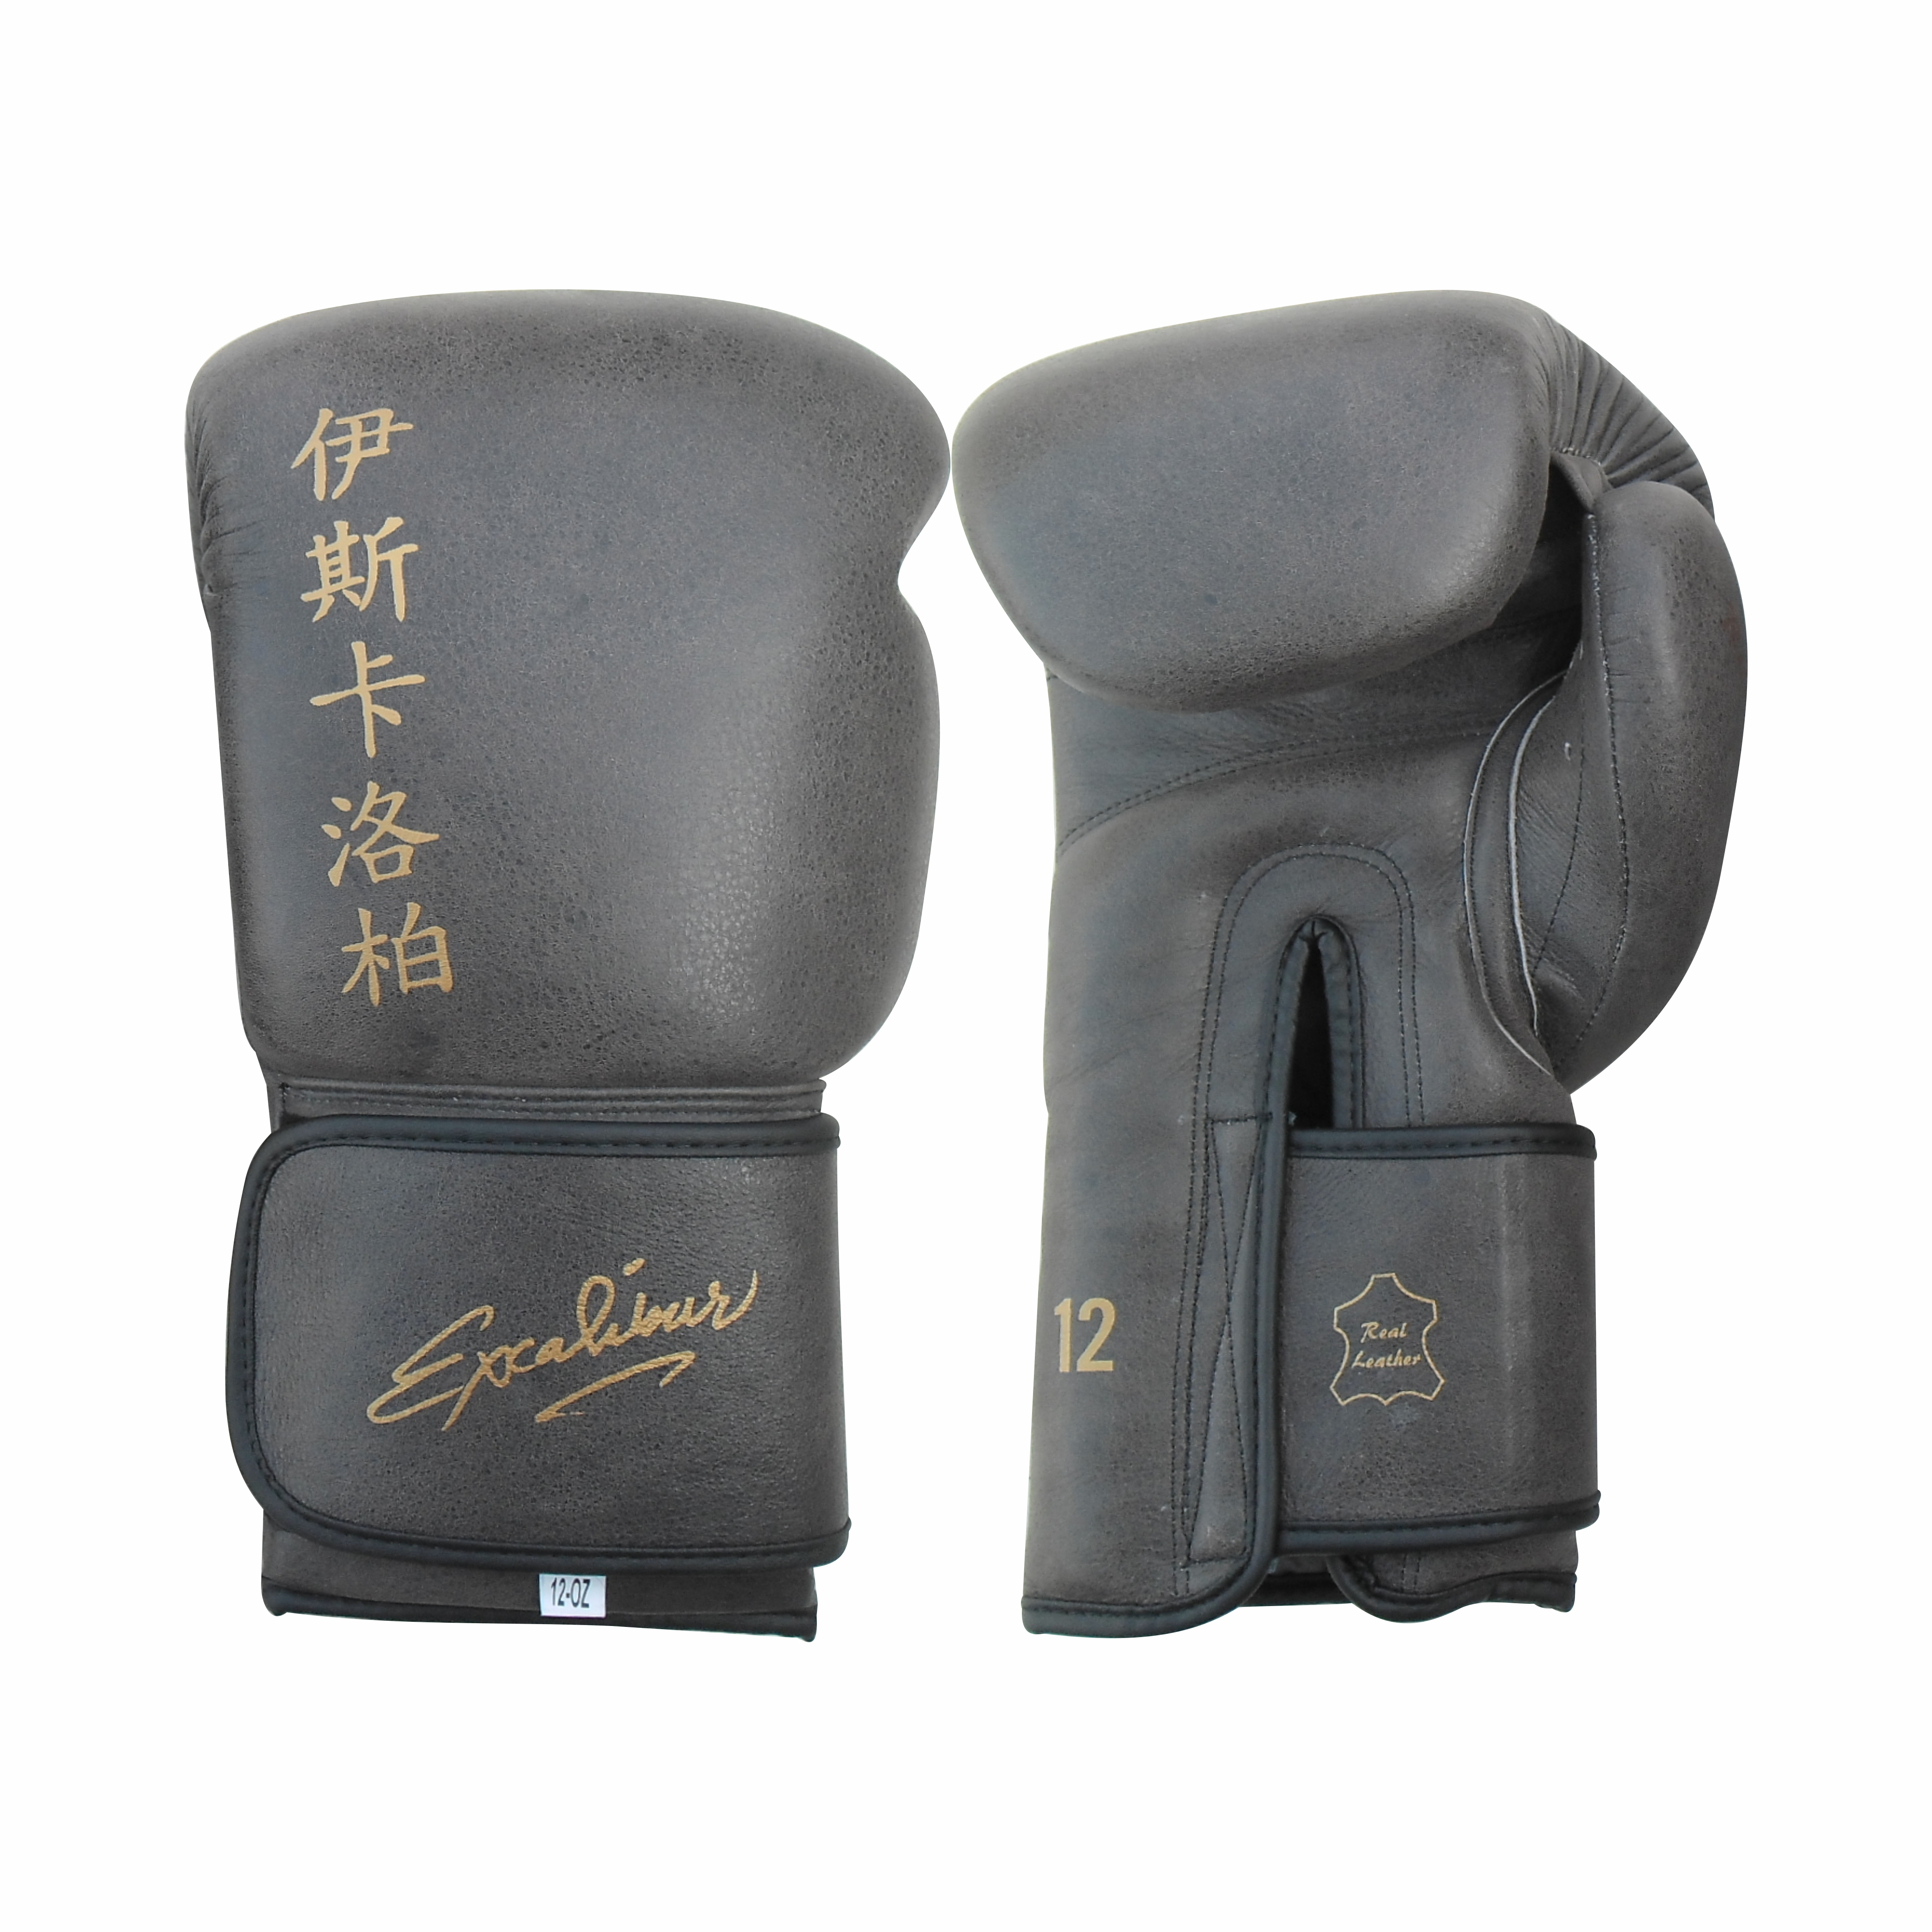 BG-Retro Boxing Gloves